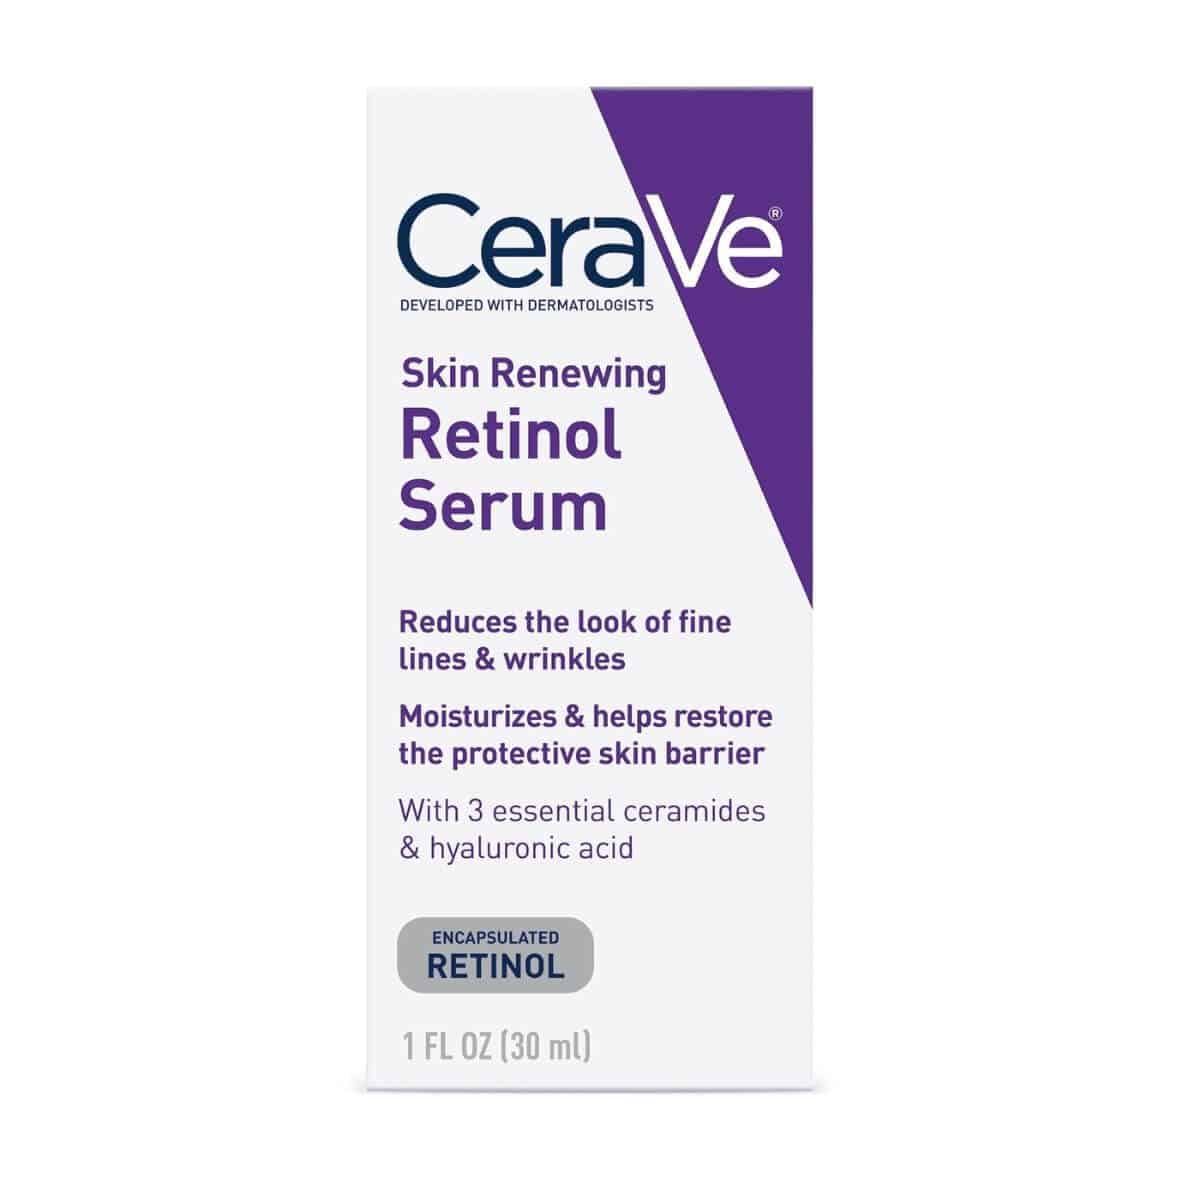 Box of CeraVe retinol serum.